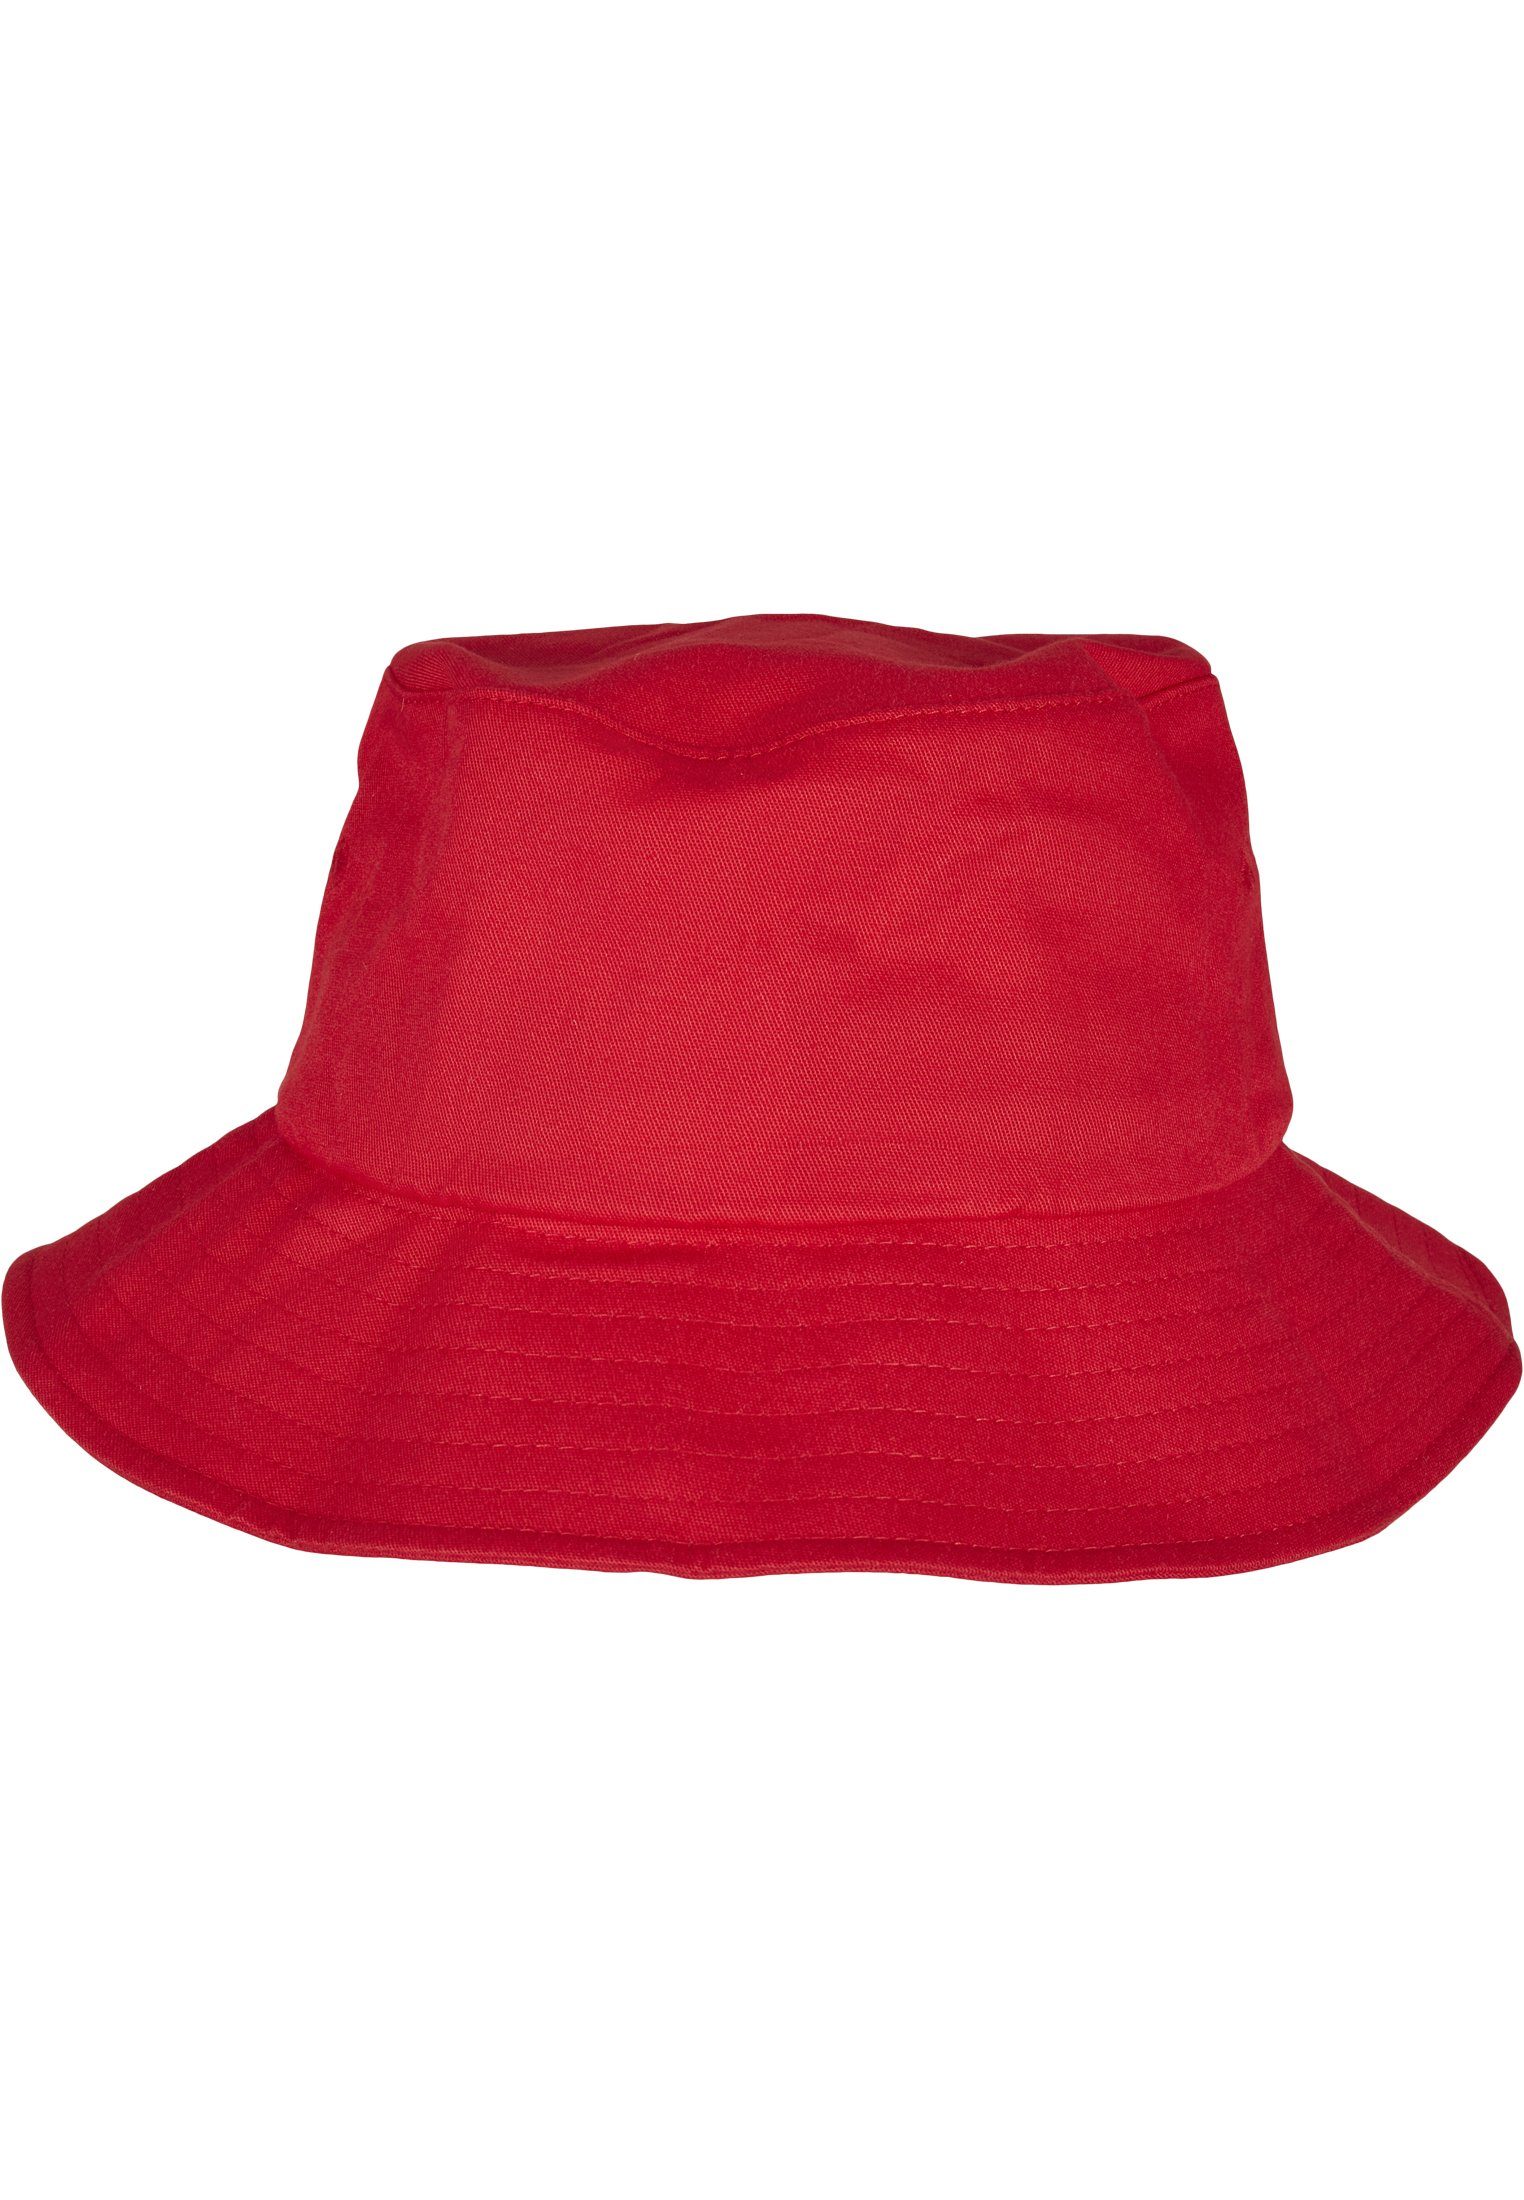 MisterTee Snapback Cap Bad Accessoires Hat Boy Bucket